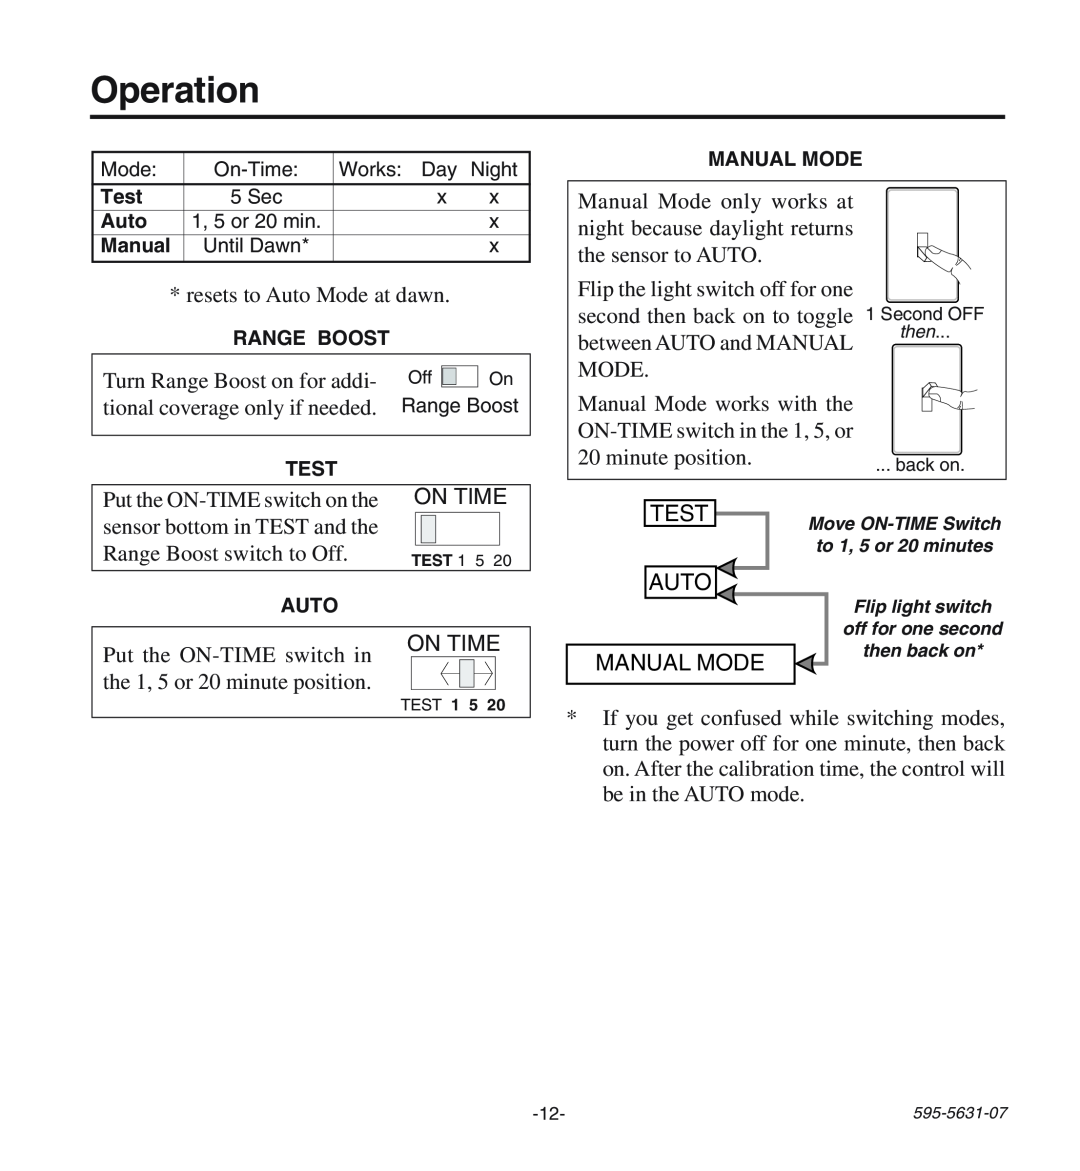 Desa HD-9240 manual Operation, Test, Auto, Manual Mode 